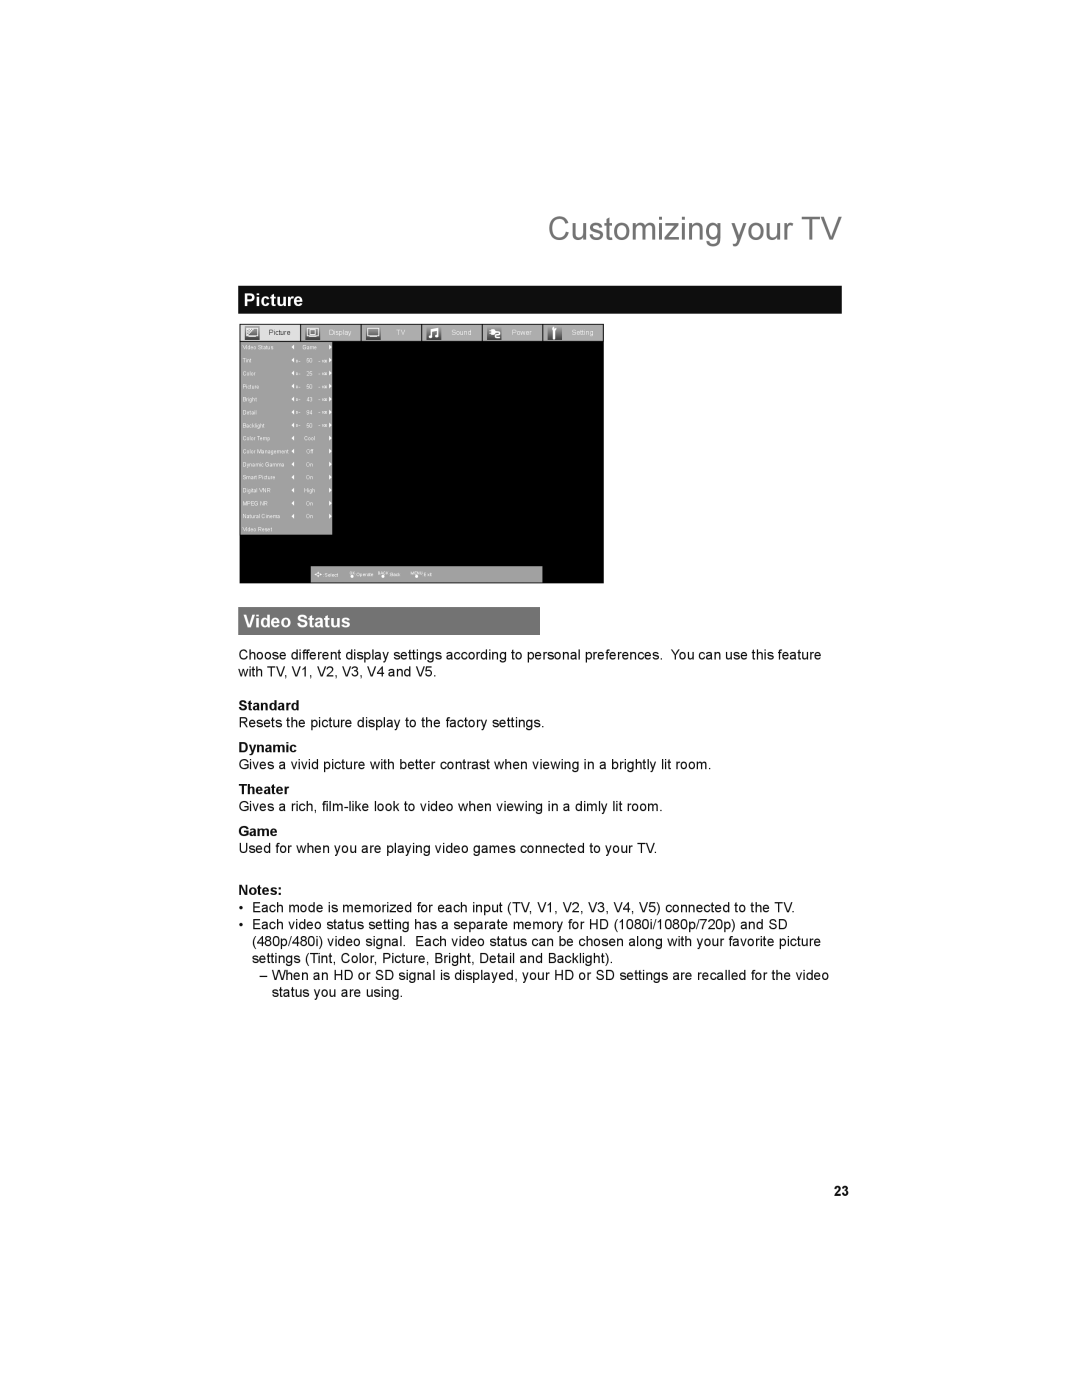 JVC LT-42EM59, LT-47EM59, LT-47X579 manual Customizing your TV, Picture, Video Status 